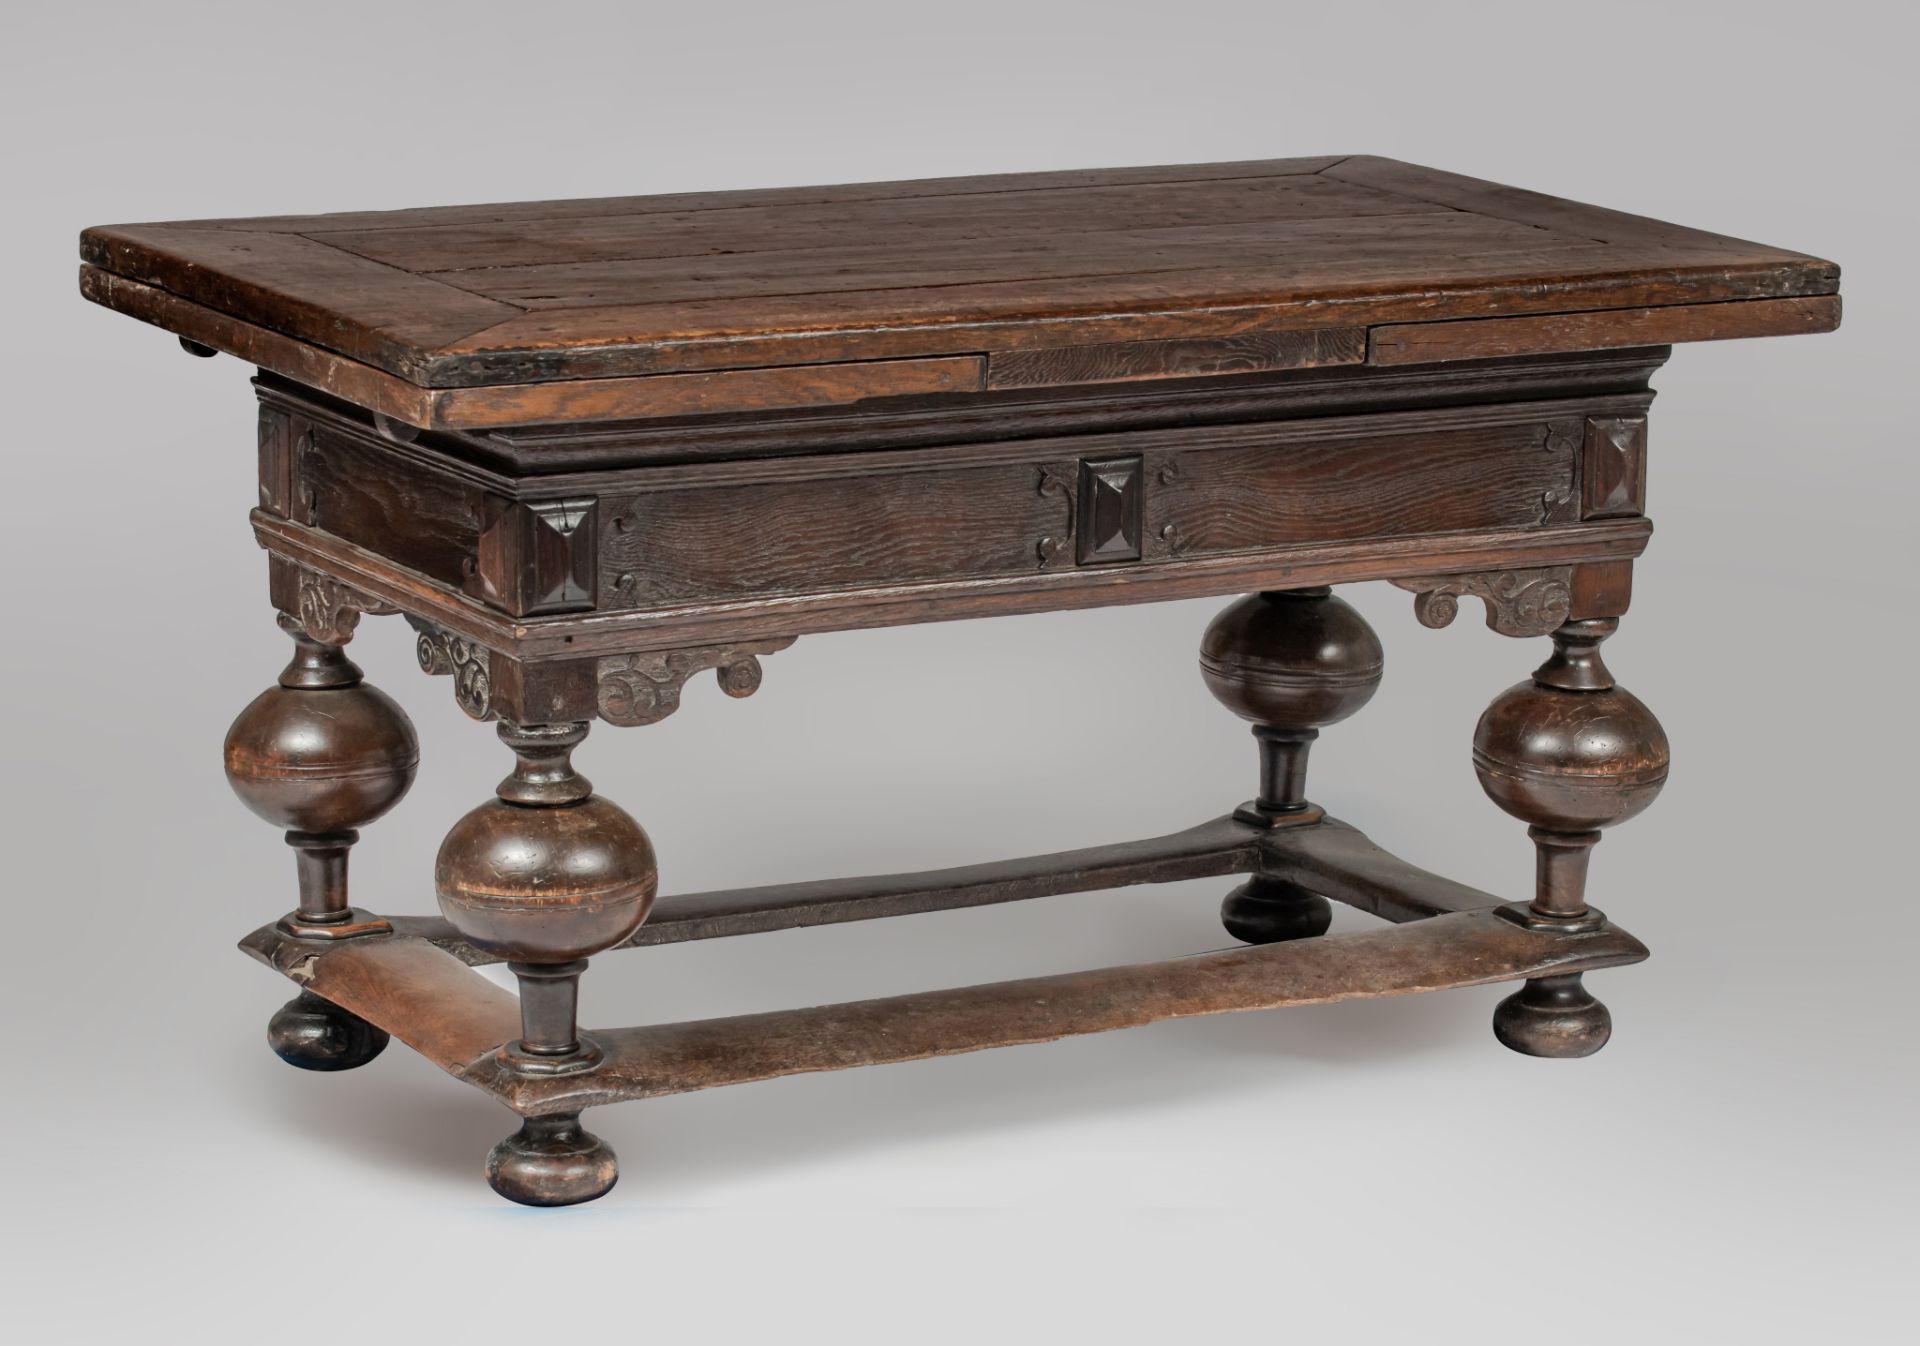 An impressive Flemish or Dutch oak table, early 17thC, H 80 - W 146 - 252 - D 85 cm - Image 8 of 8